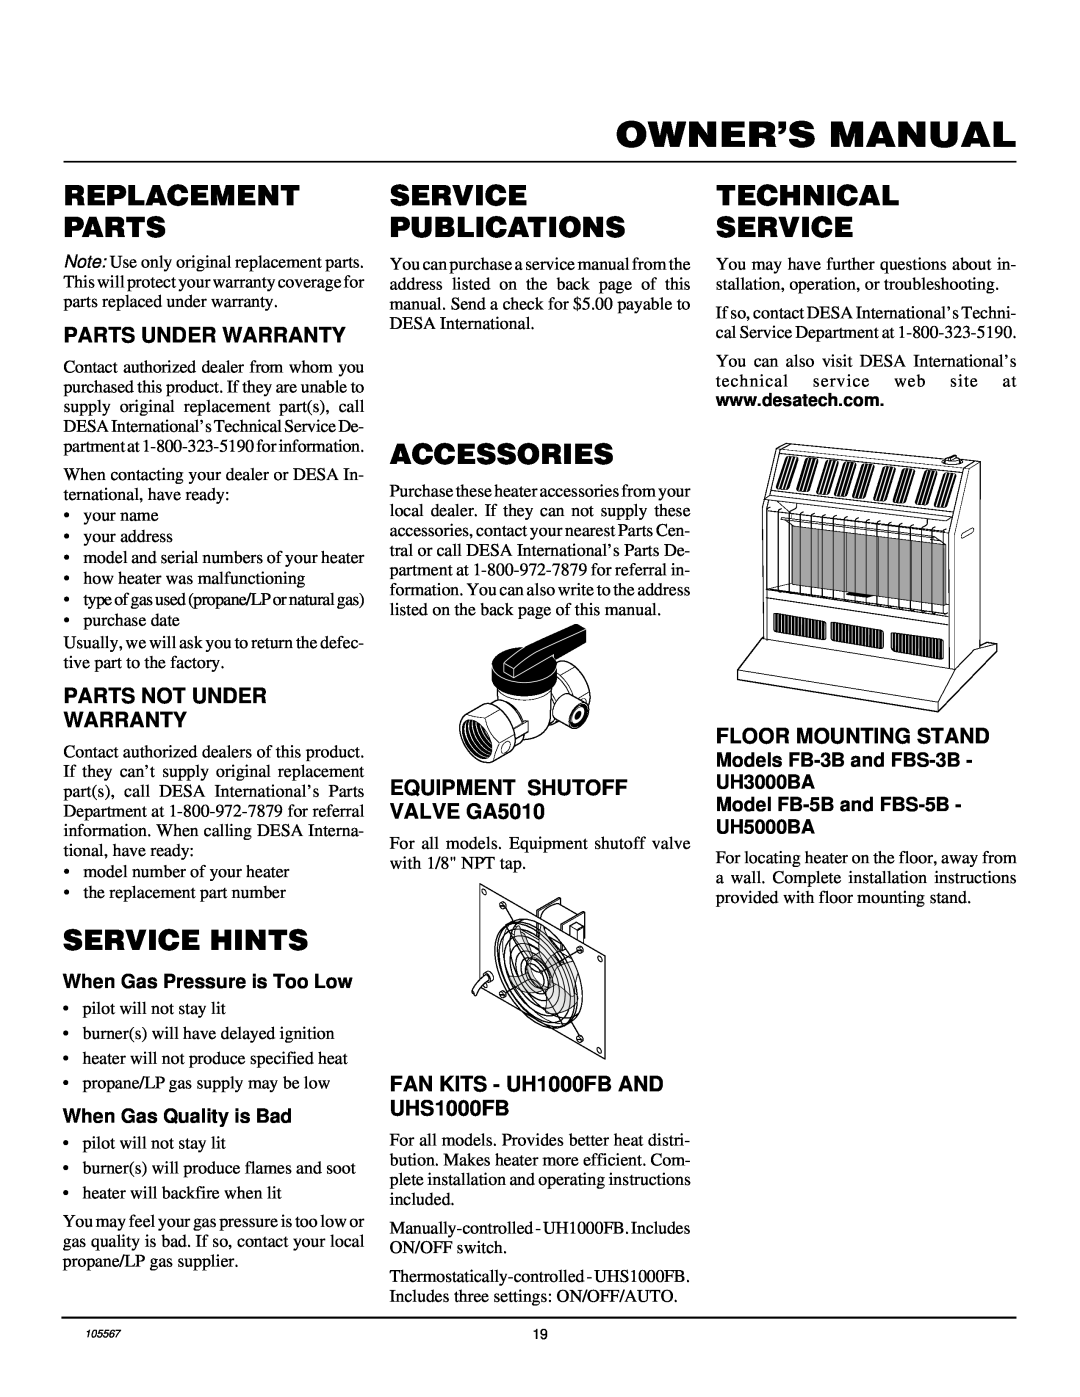 Desa FB-3B Replacement Parts, Service Hints, Service Publications, Accessories, Technical Service, Parts Under Warranty 